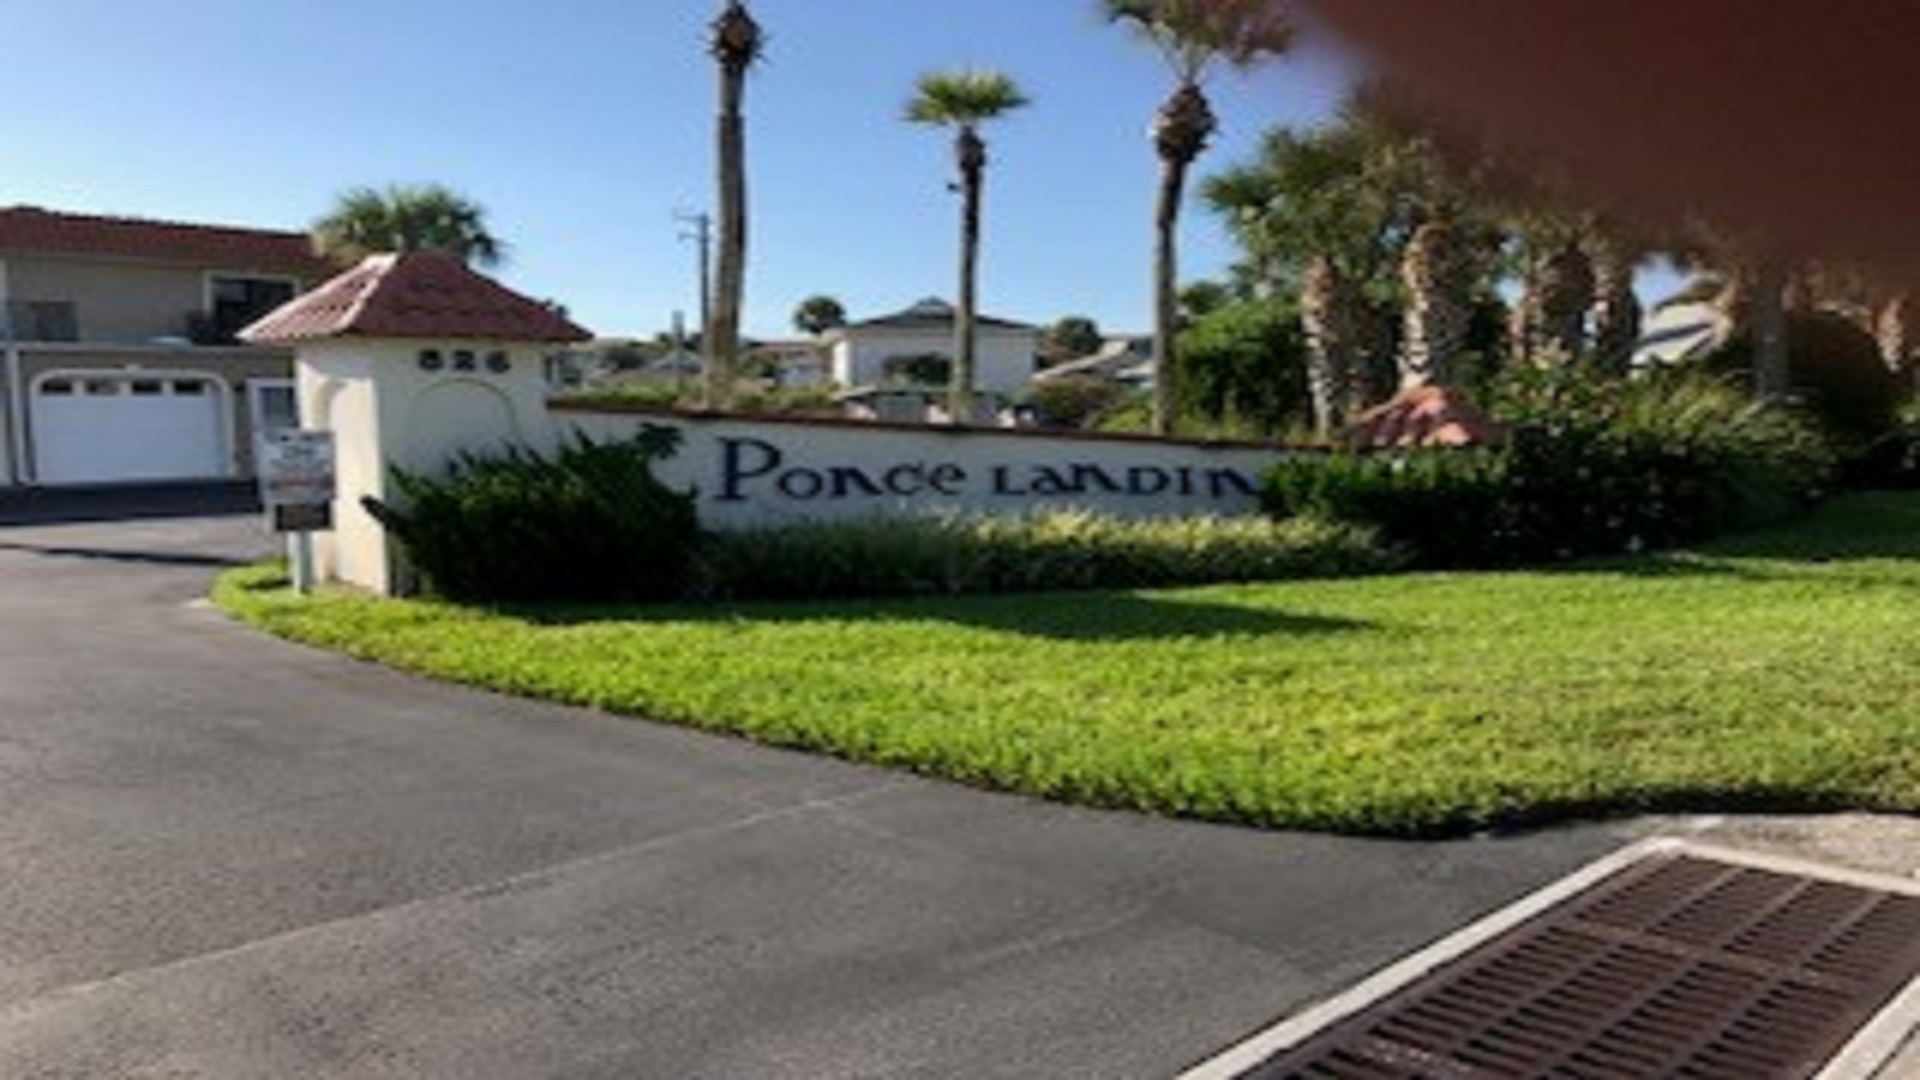 Ponce Landing Ocean front property